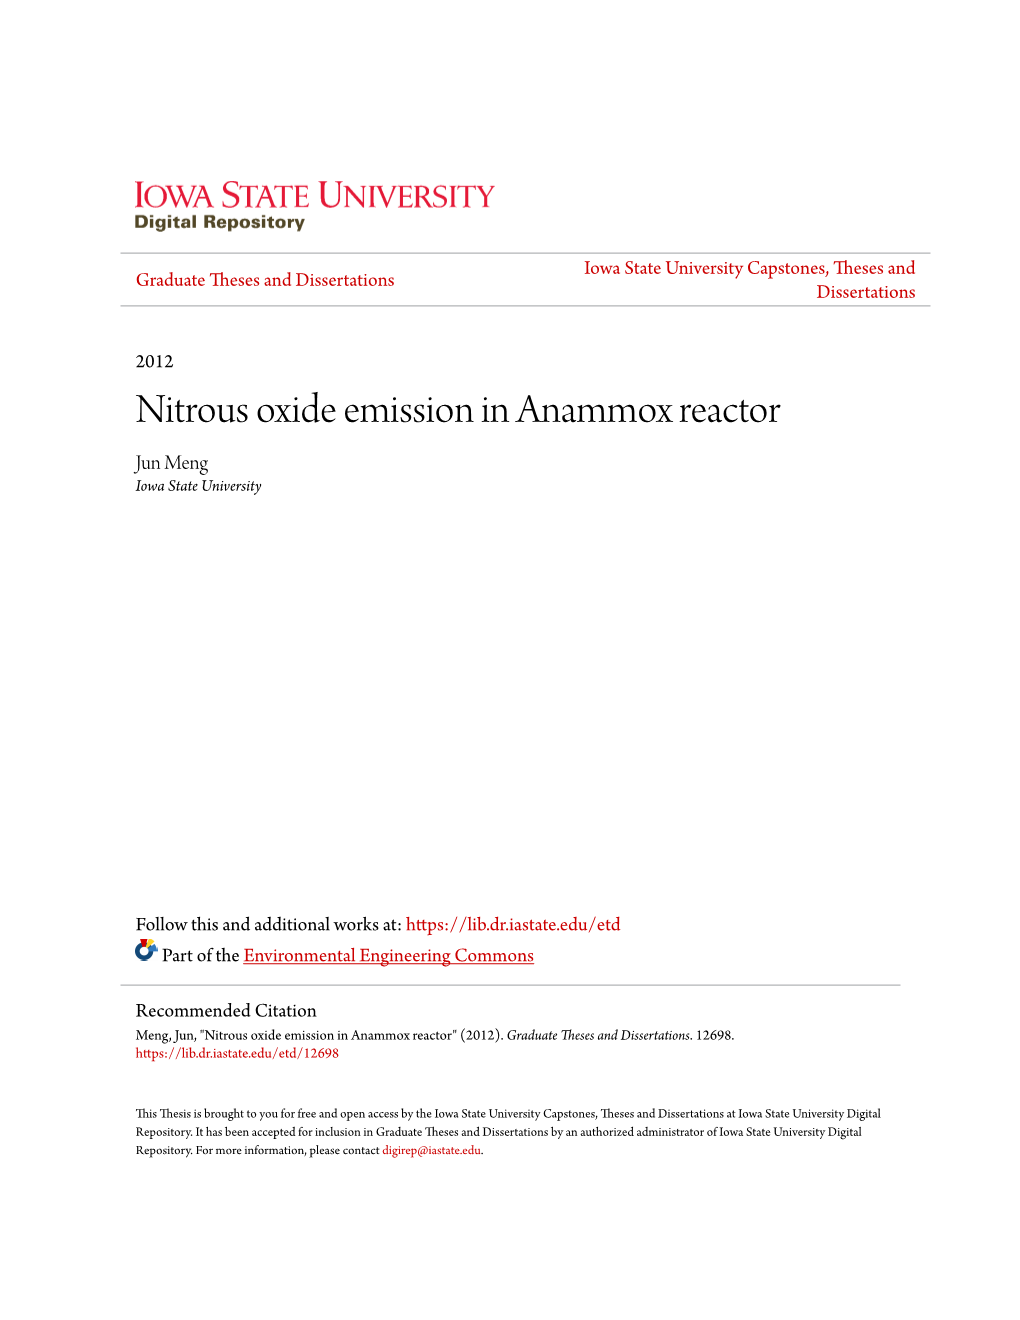 Nitrous Oxide Emission in Anammox Reactor Jun Meng Iowa State University